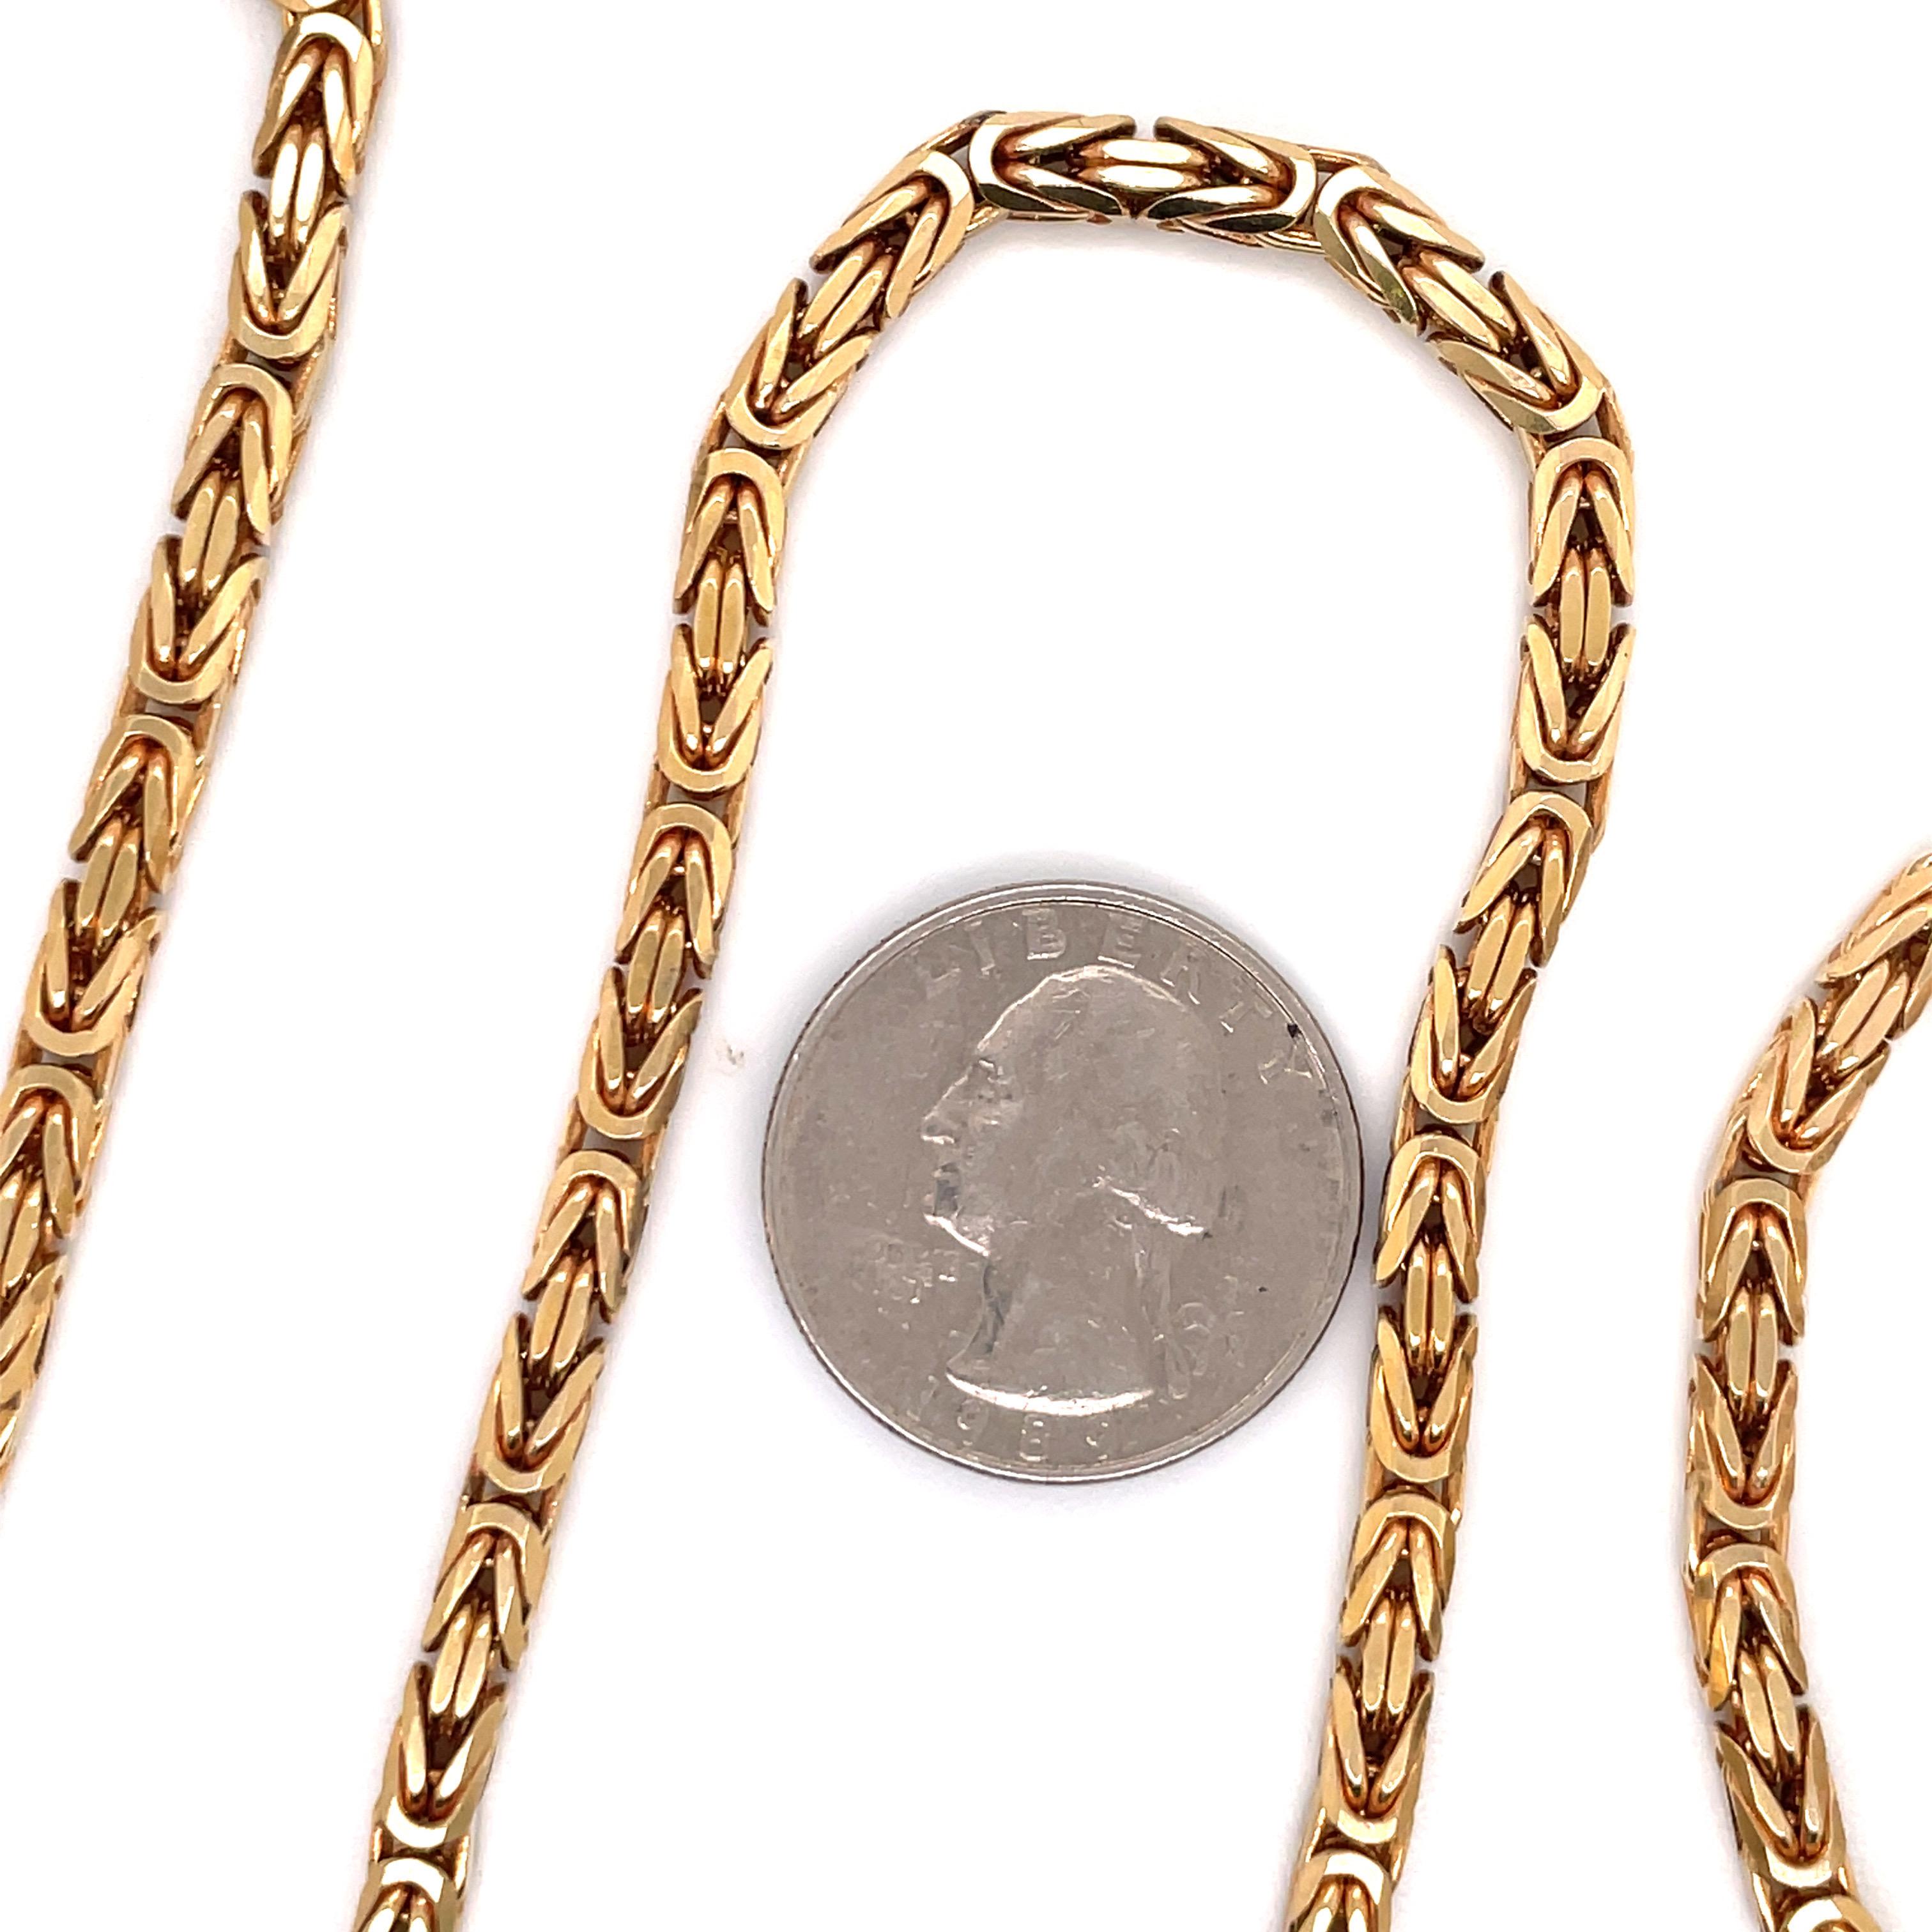 10k gold byzantine chain